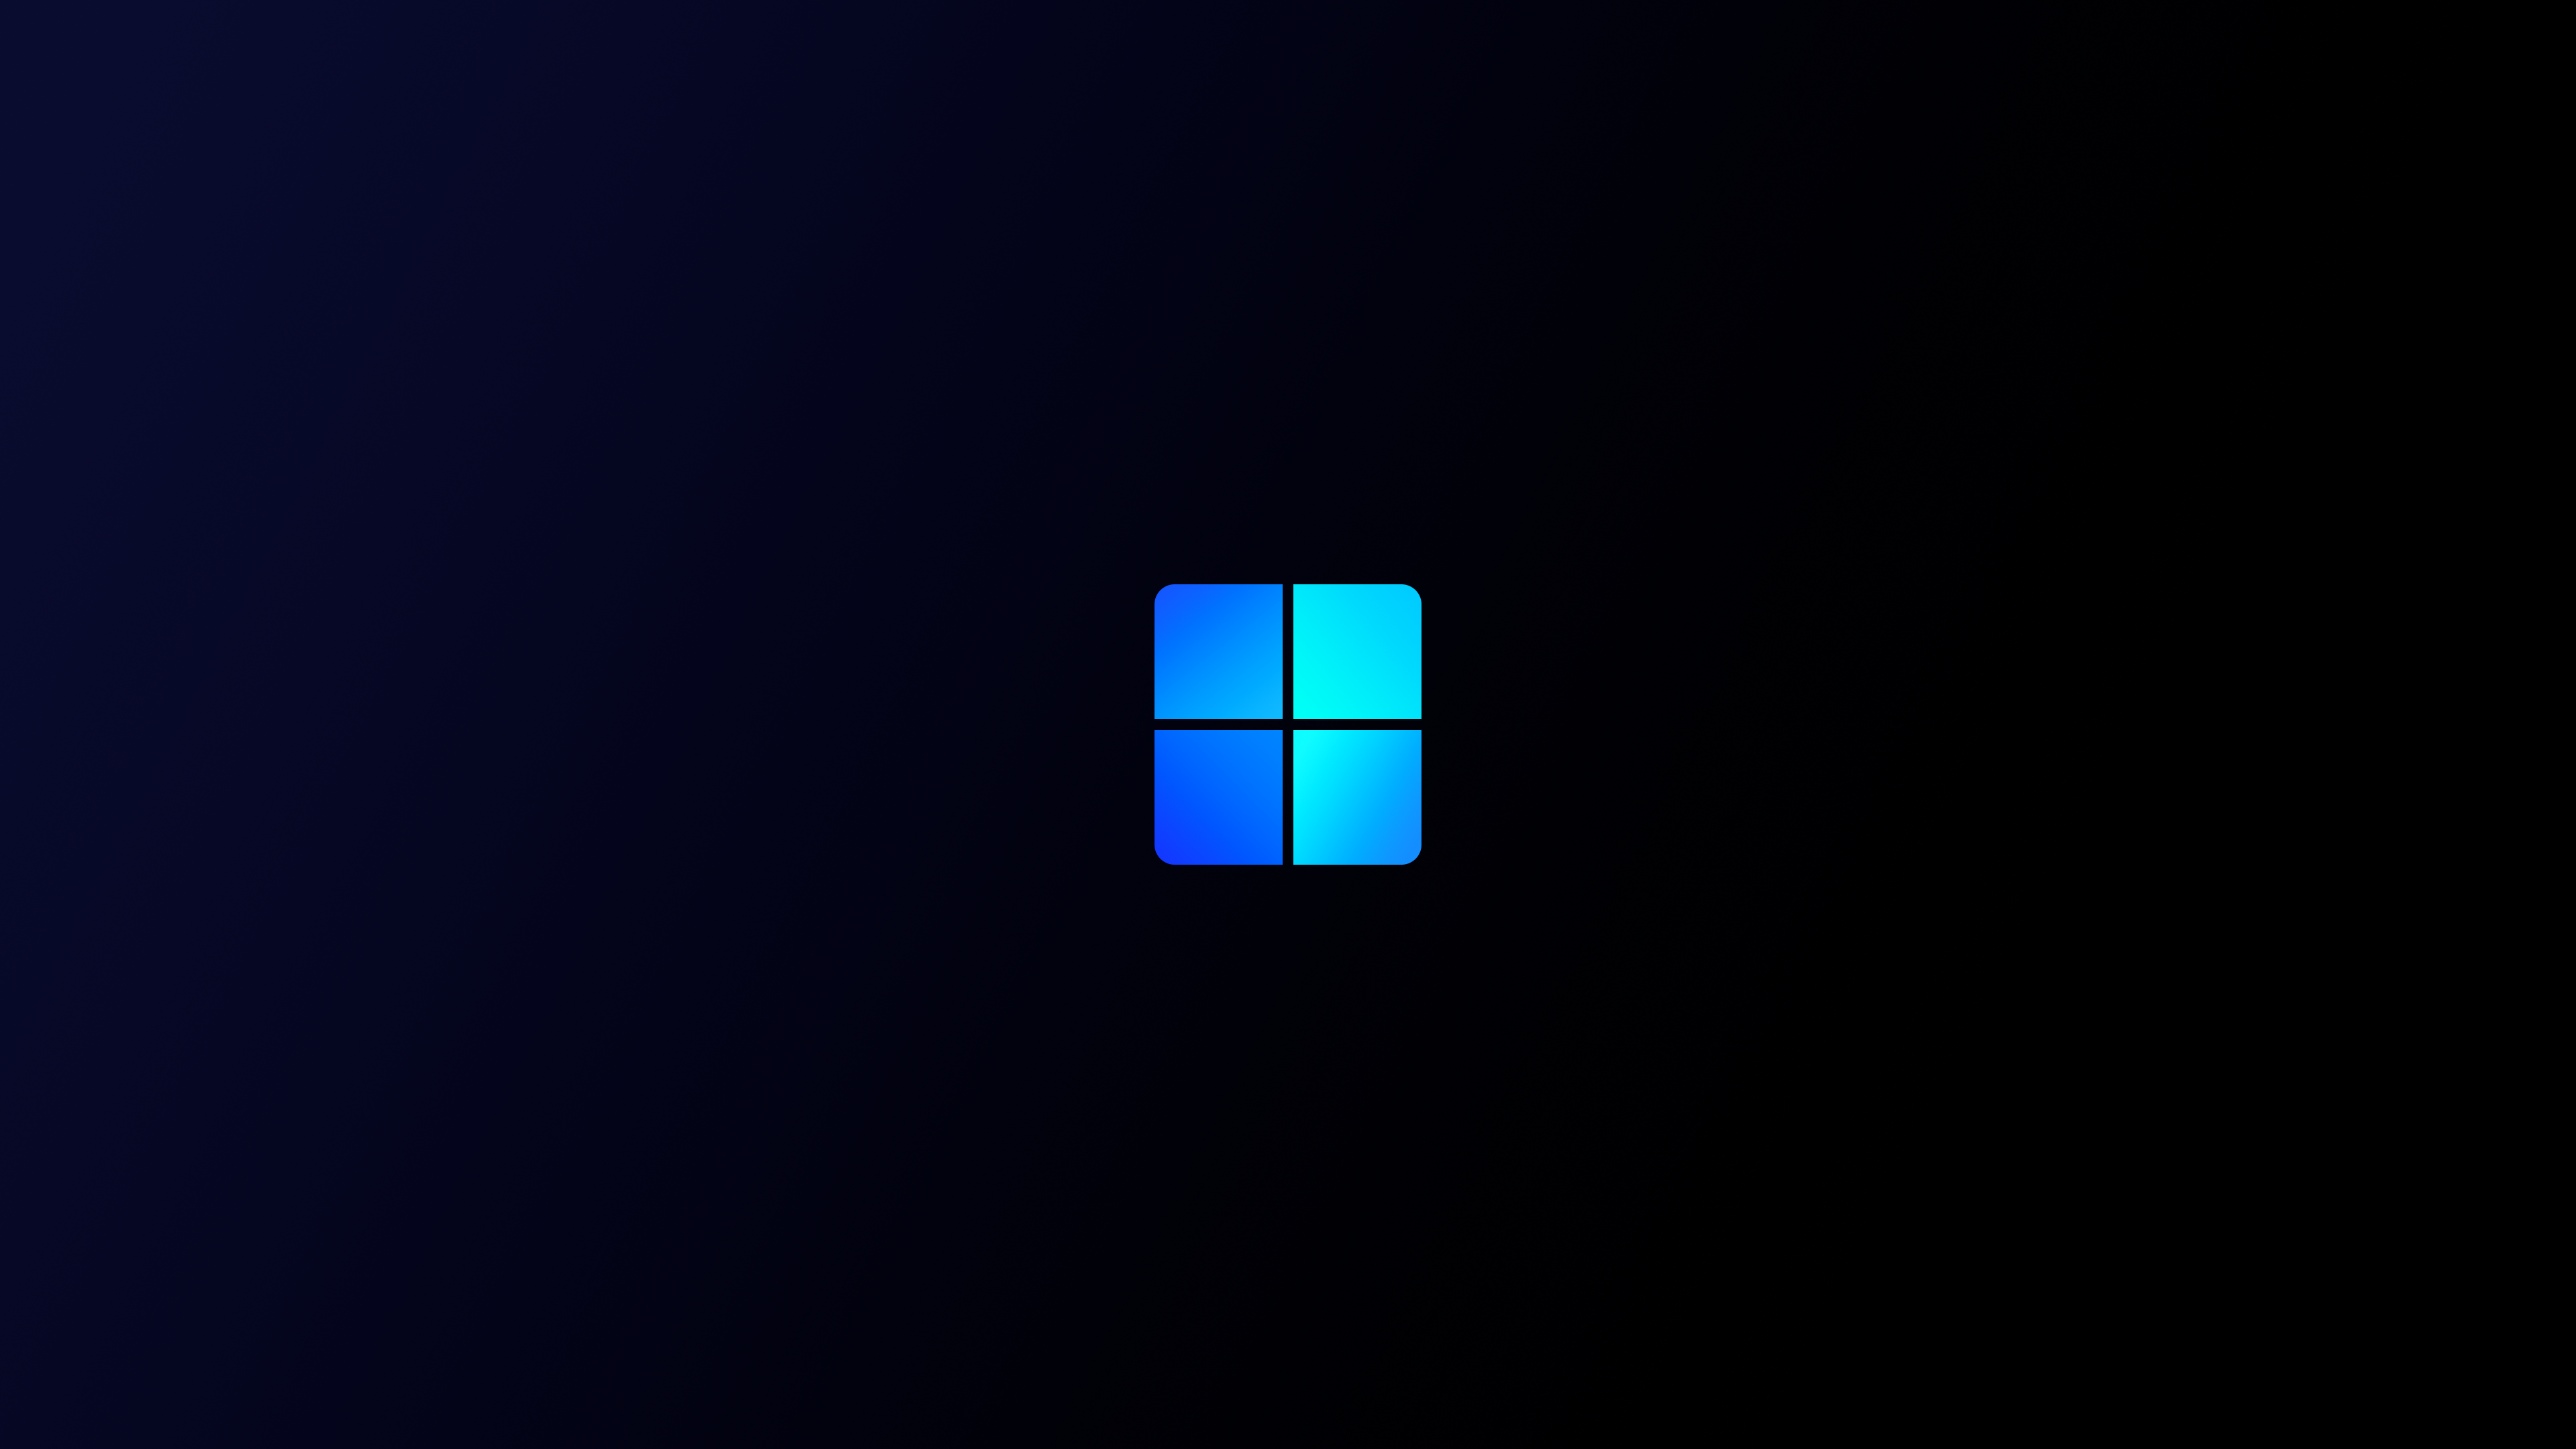 Windows 11 pictures. Обои Windows 11. Заставка Windows 11. Картинки на рабочий стол Windows 11. Обои Windows 11 черные.